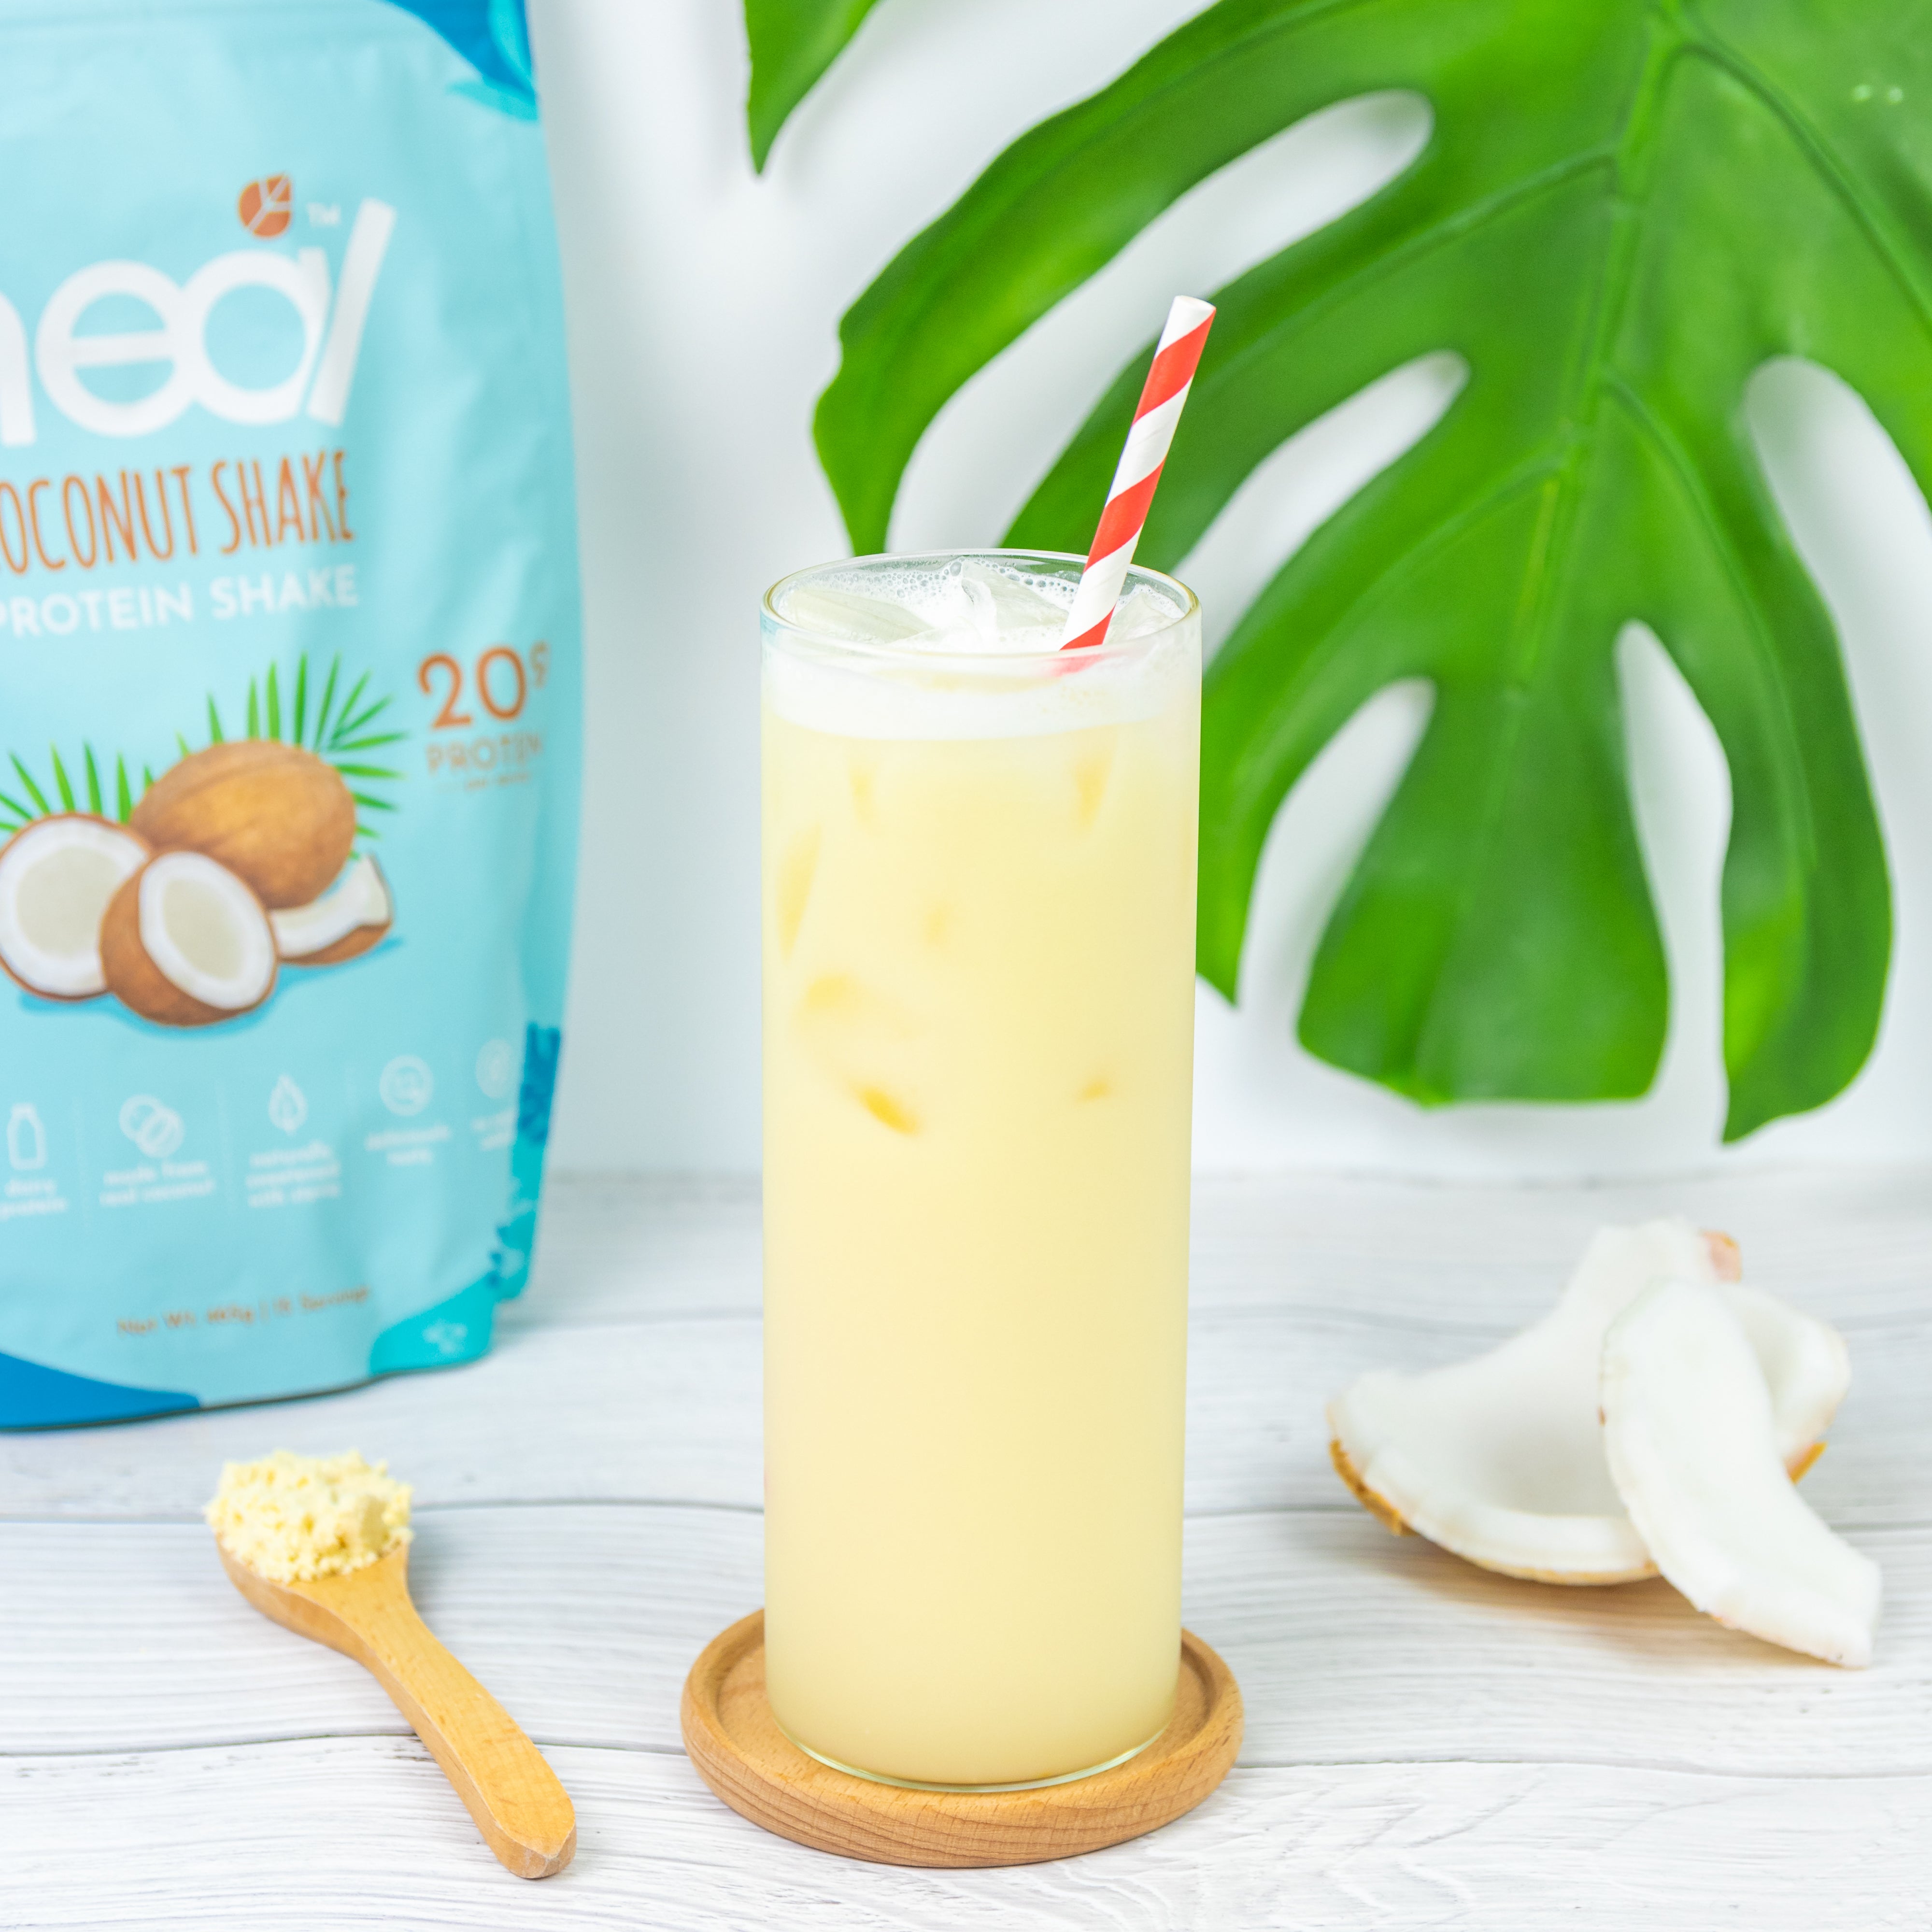 Heal Coconut Shake Protein Shake, 16 Sachets (31g)